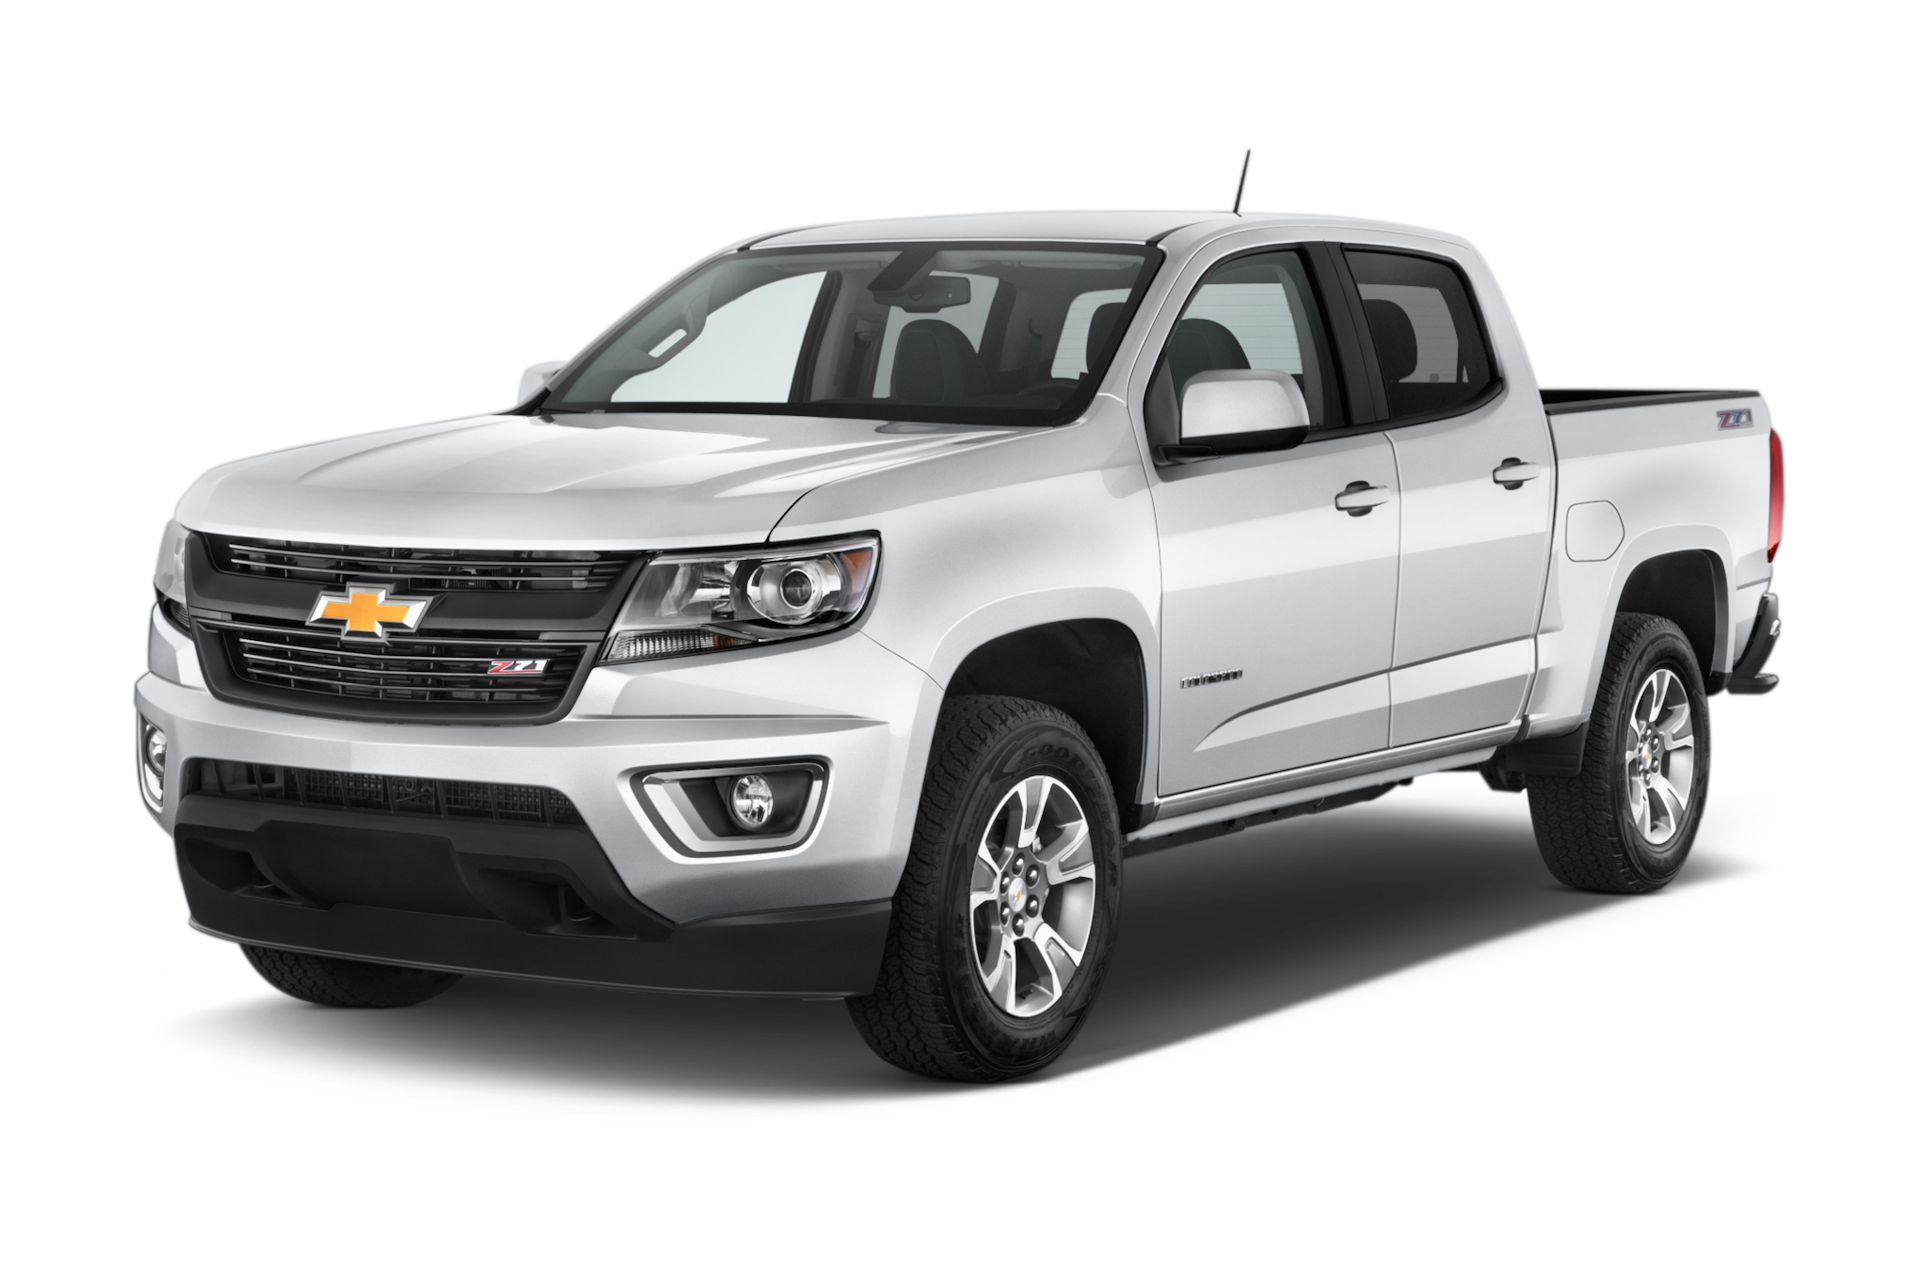 2015 Chevrolet Colorado Prices, Reviews, and Photos - MotorTrend